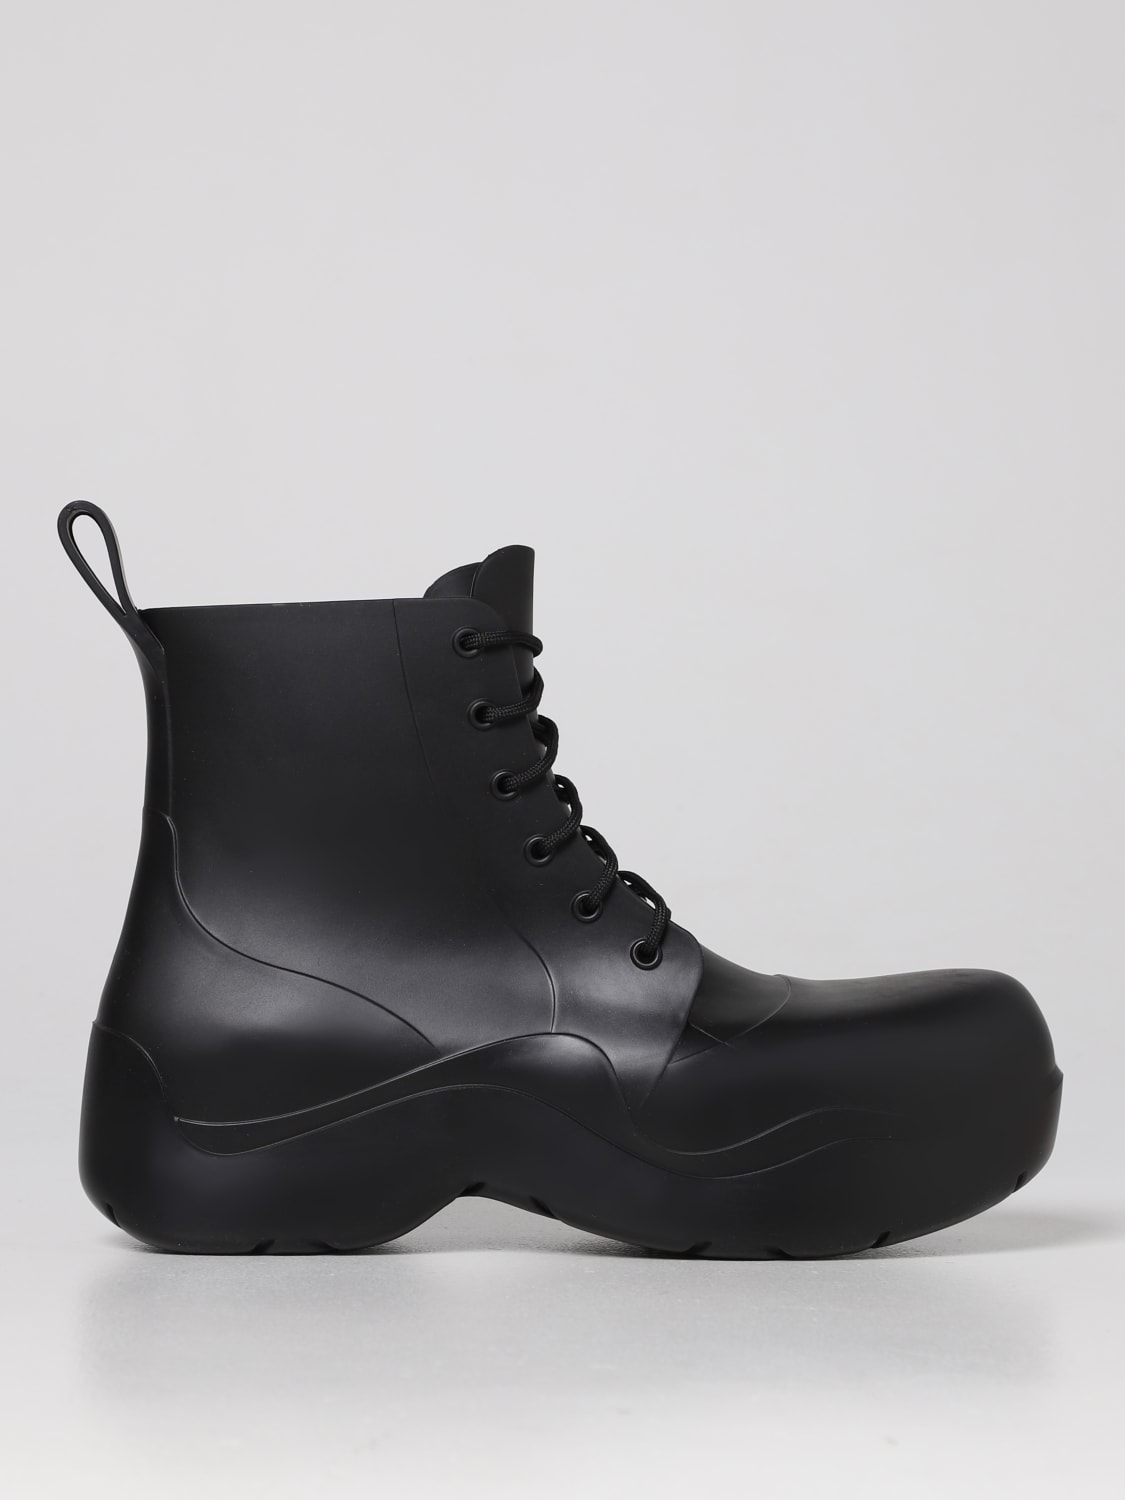 BOTTEGA VENETA: Puddle rubber boots - Black | Bottega Veneta boots